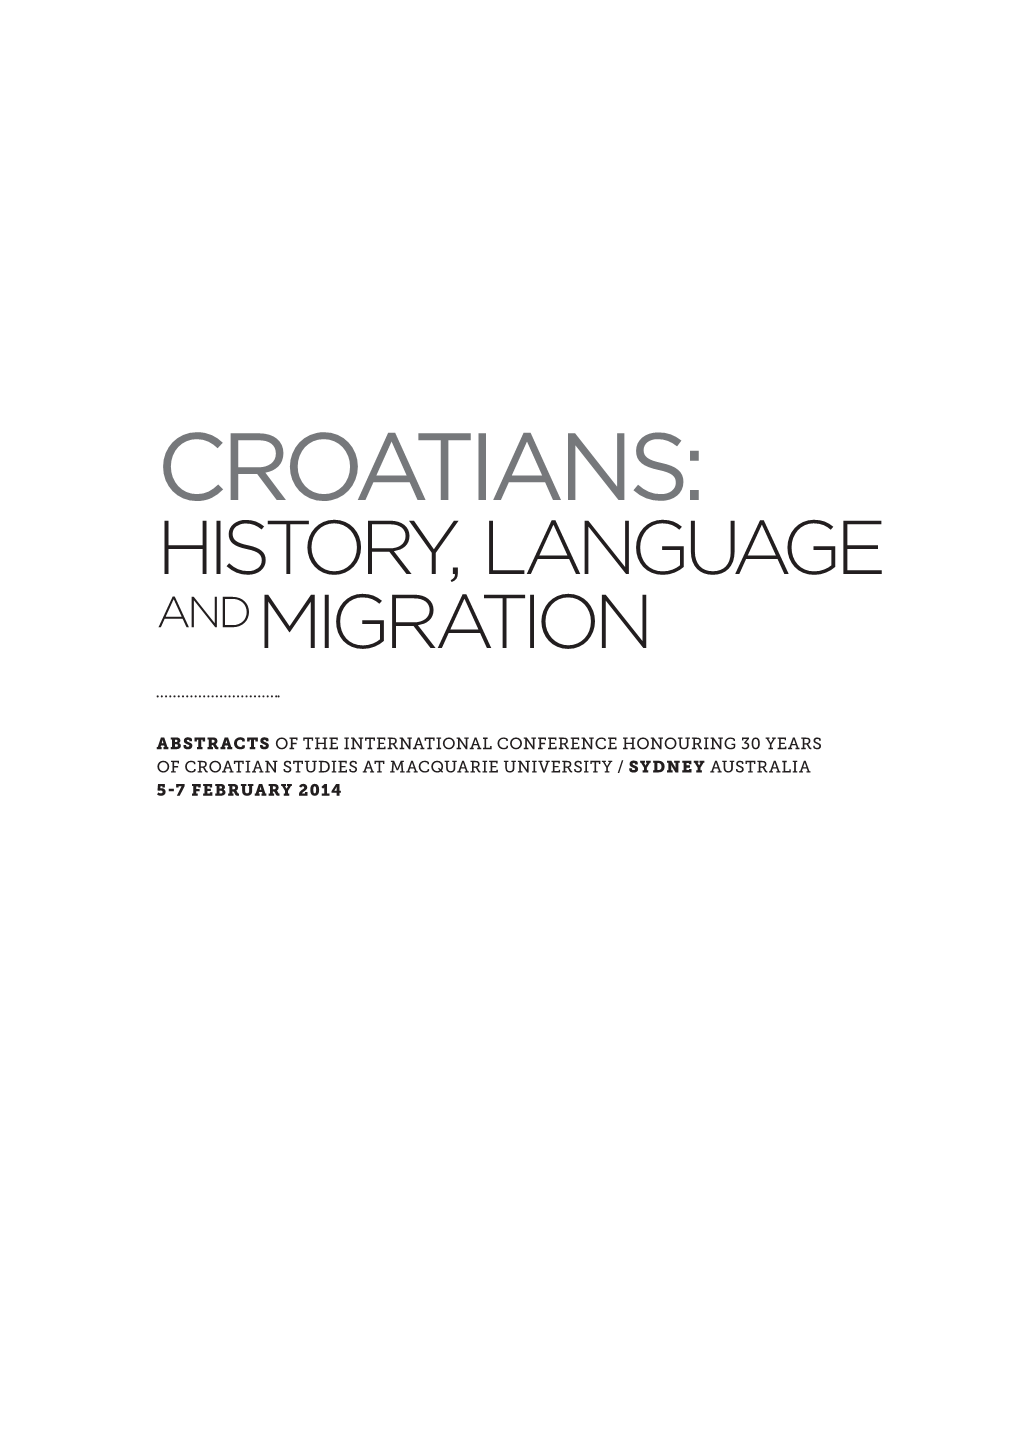 Croatians: History, Language and Migration